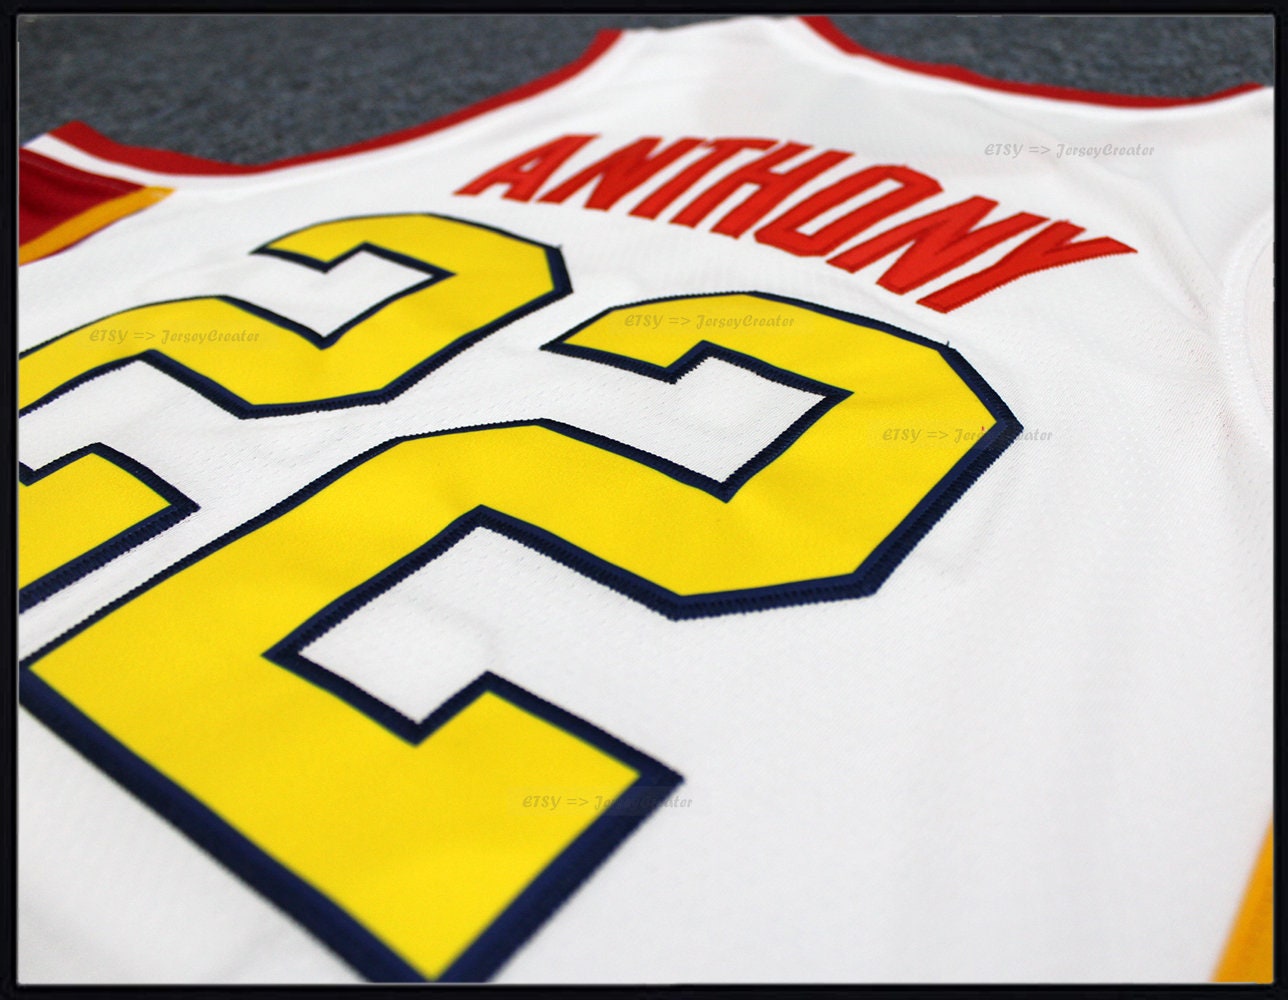 Carmelo Anthony 22 Towson Catholic High School Owls White Basketball Jersey  — BORIZ